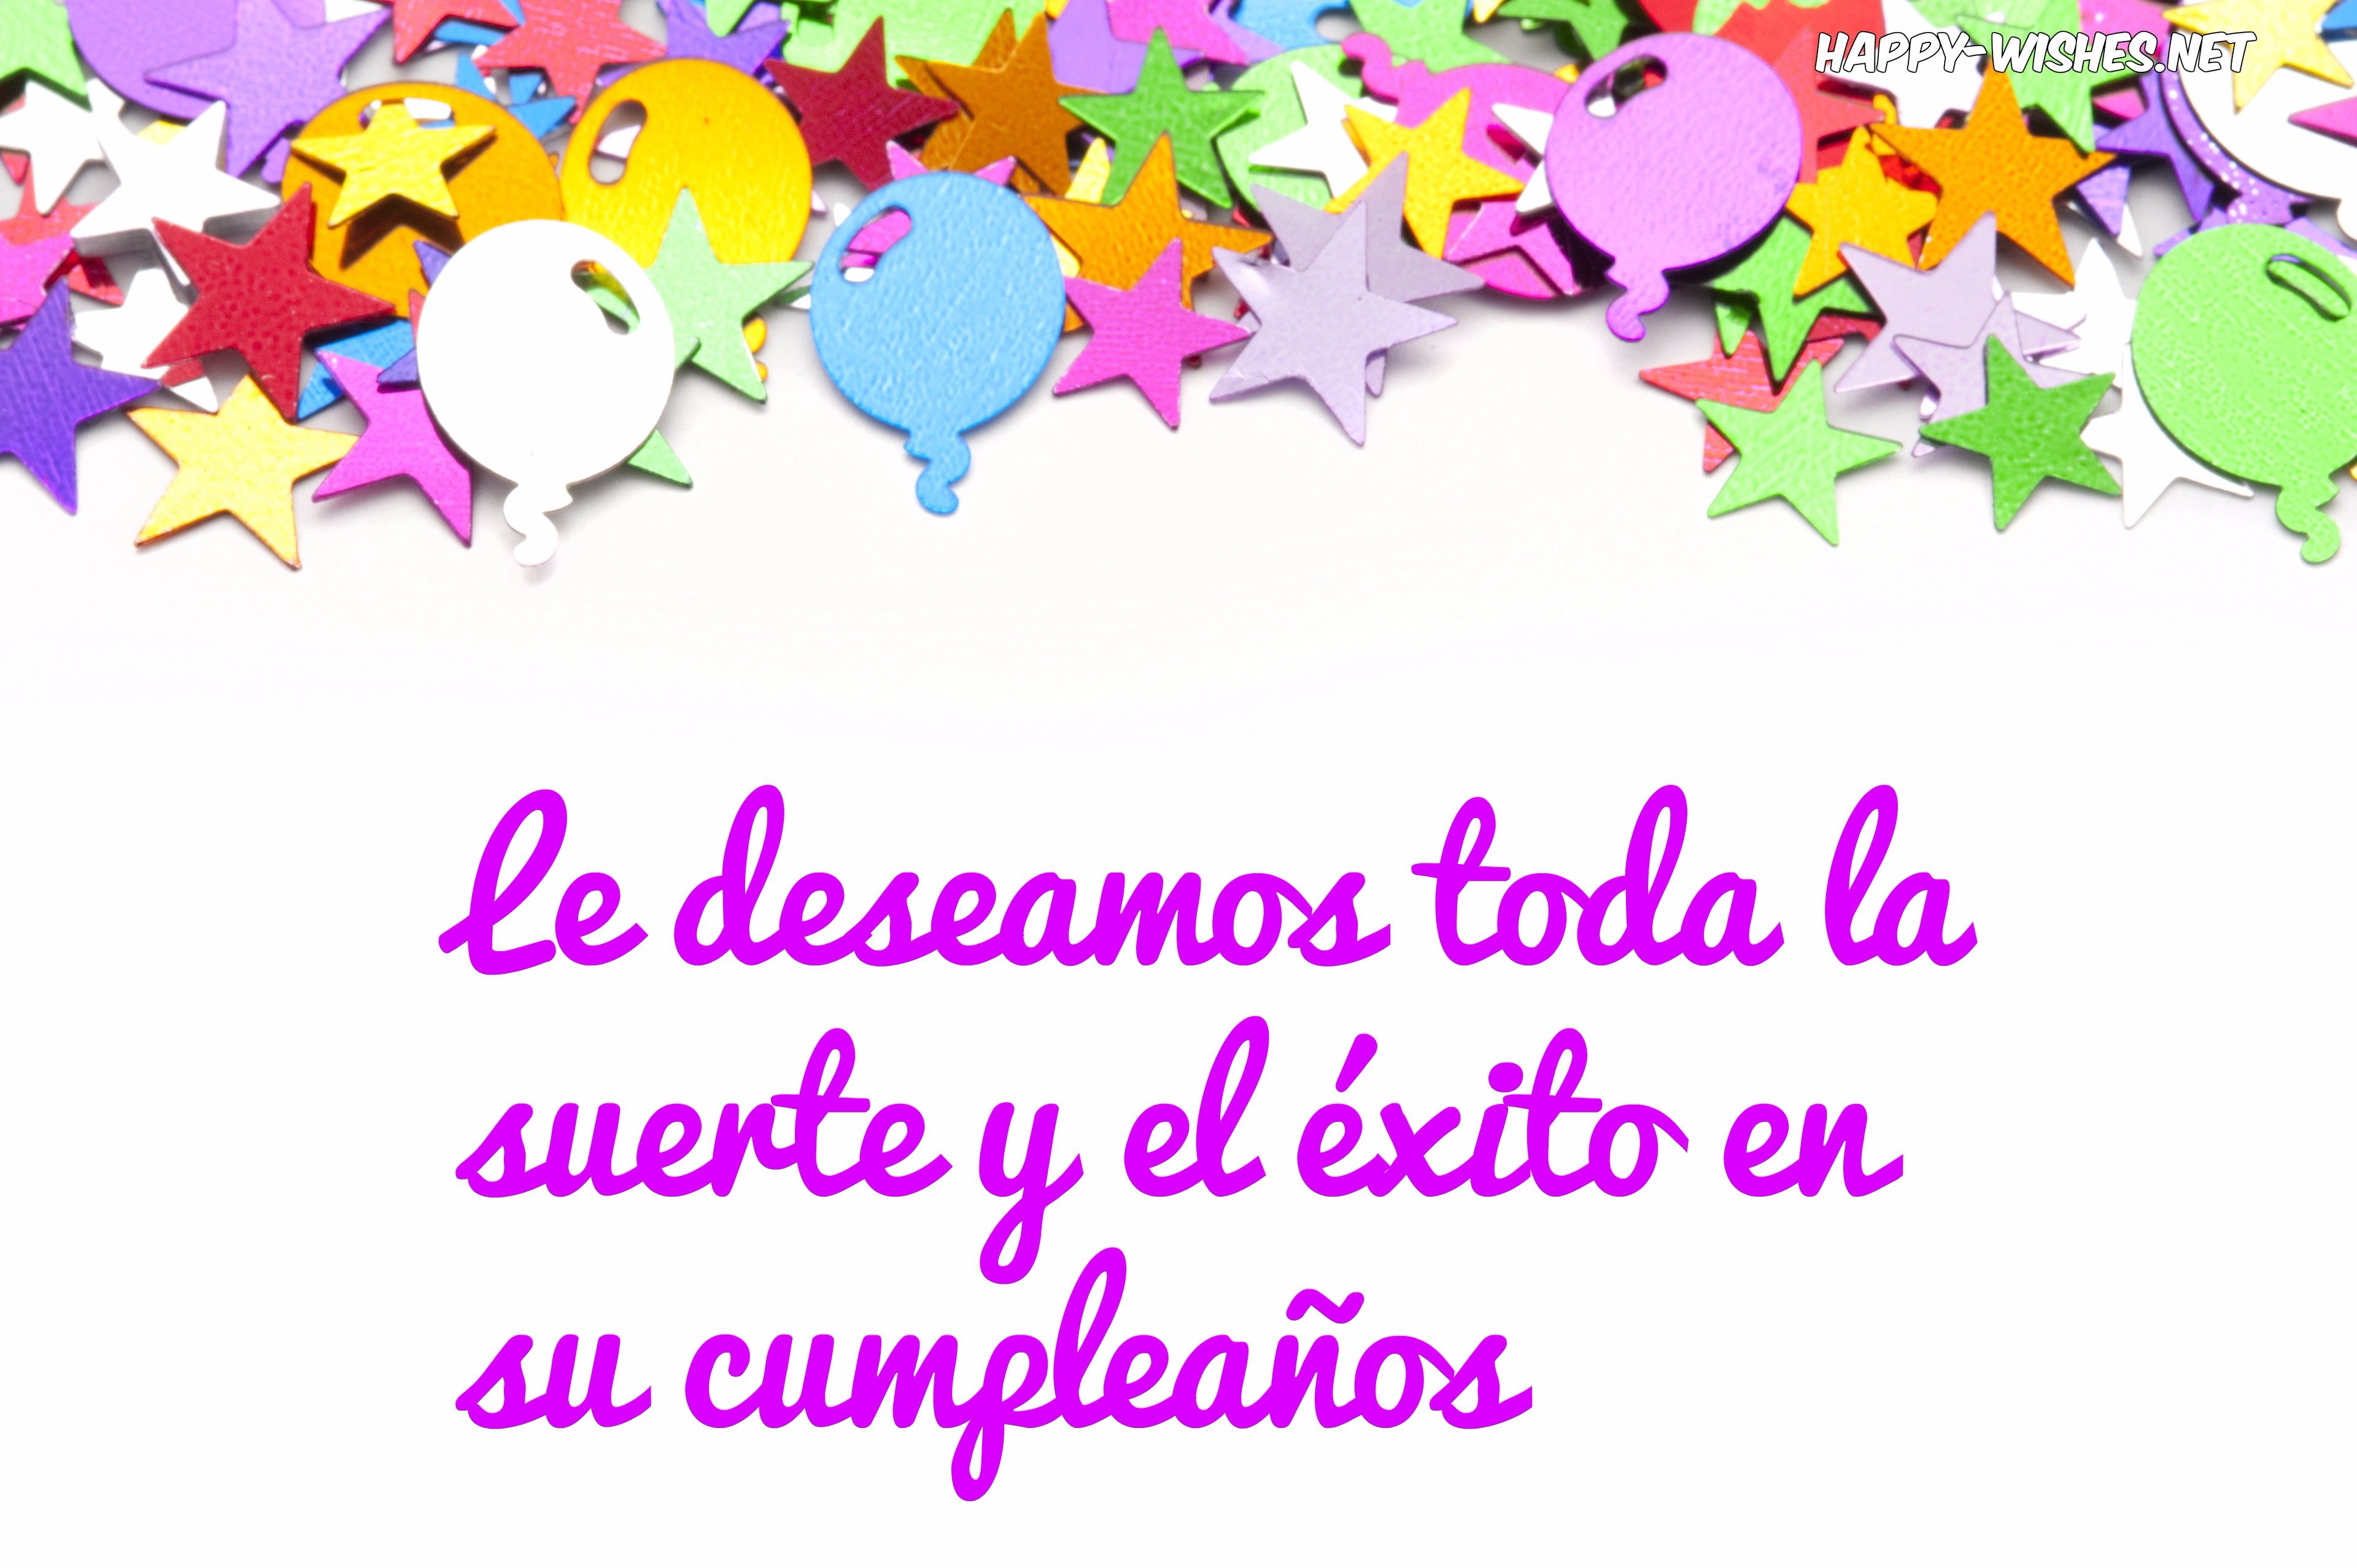 Happy Birthday Wishes In Spanish